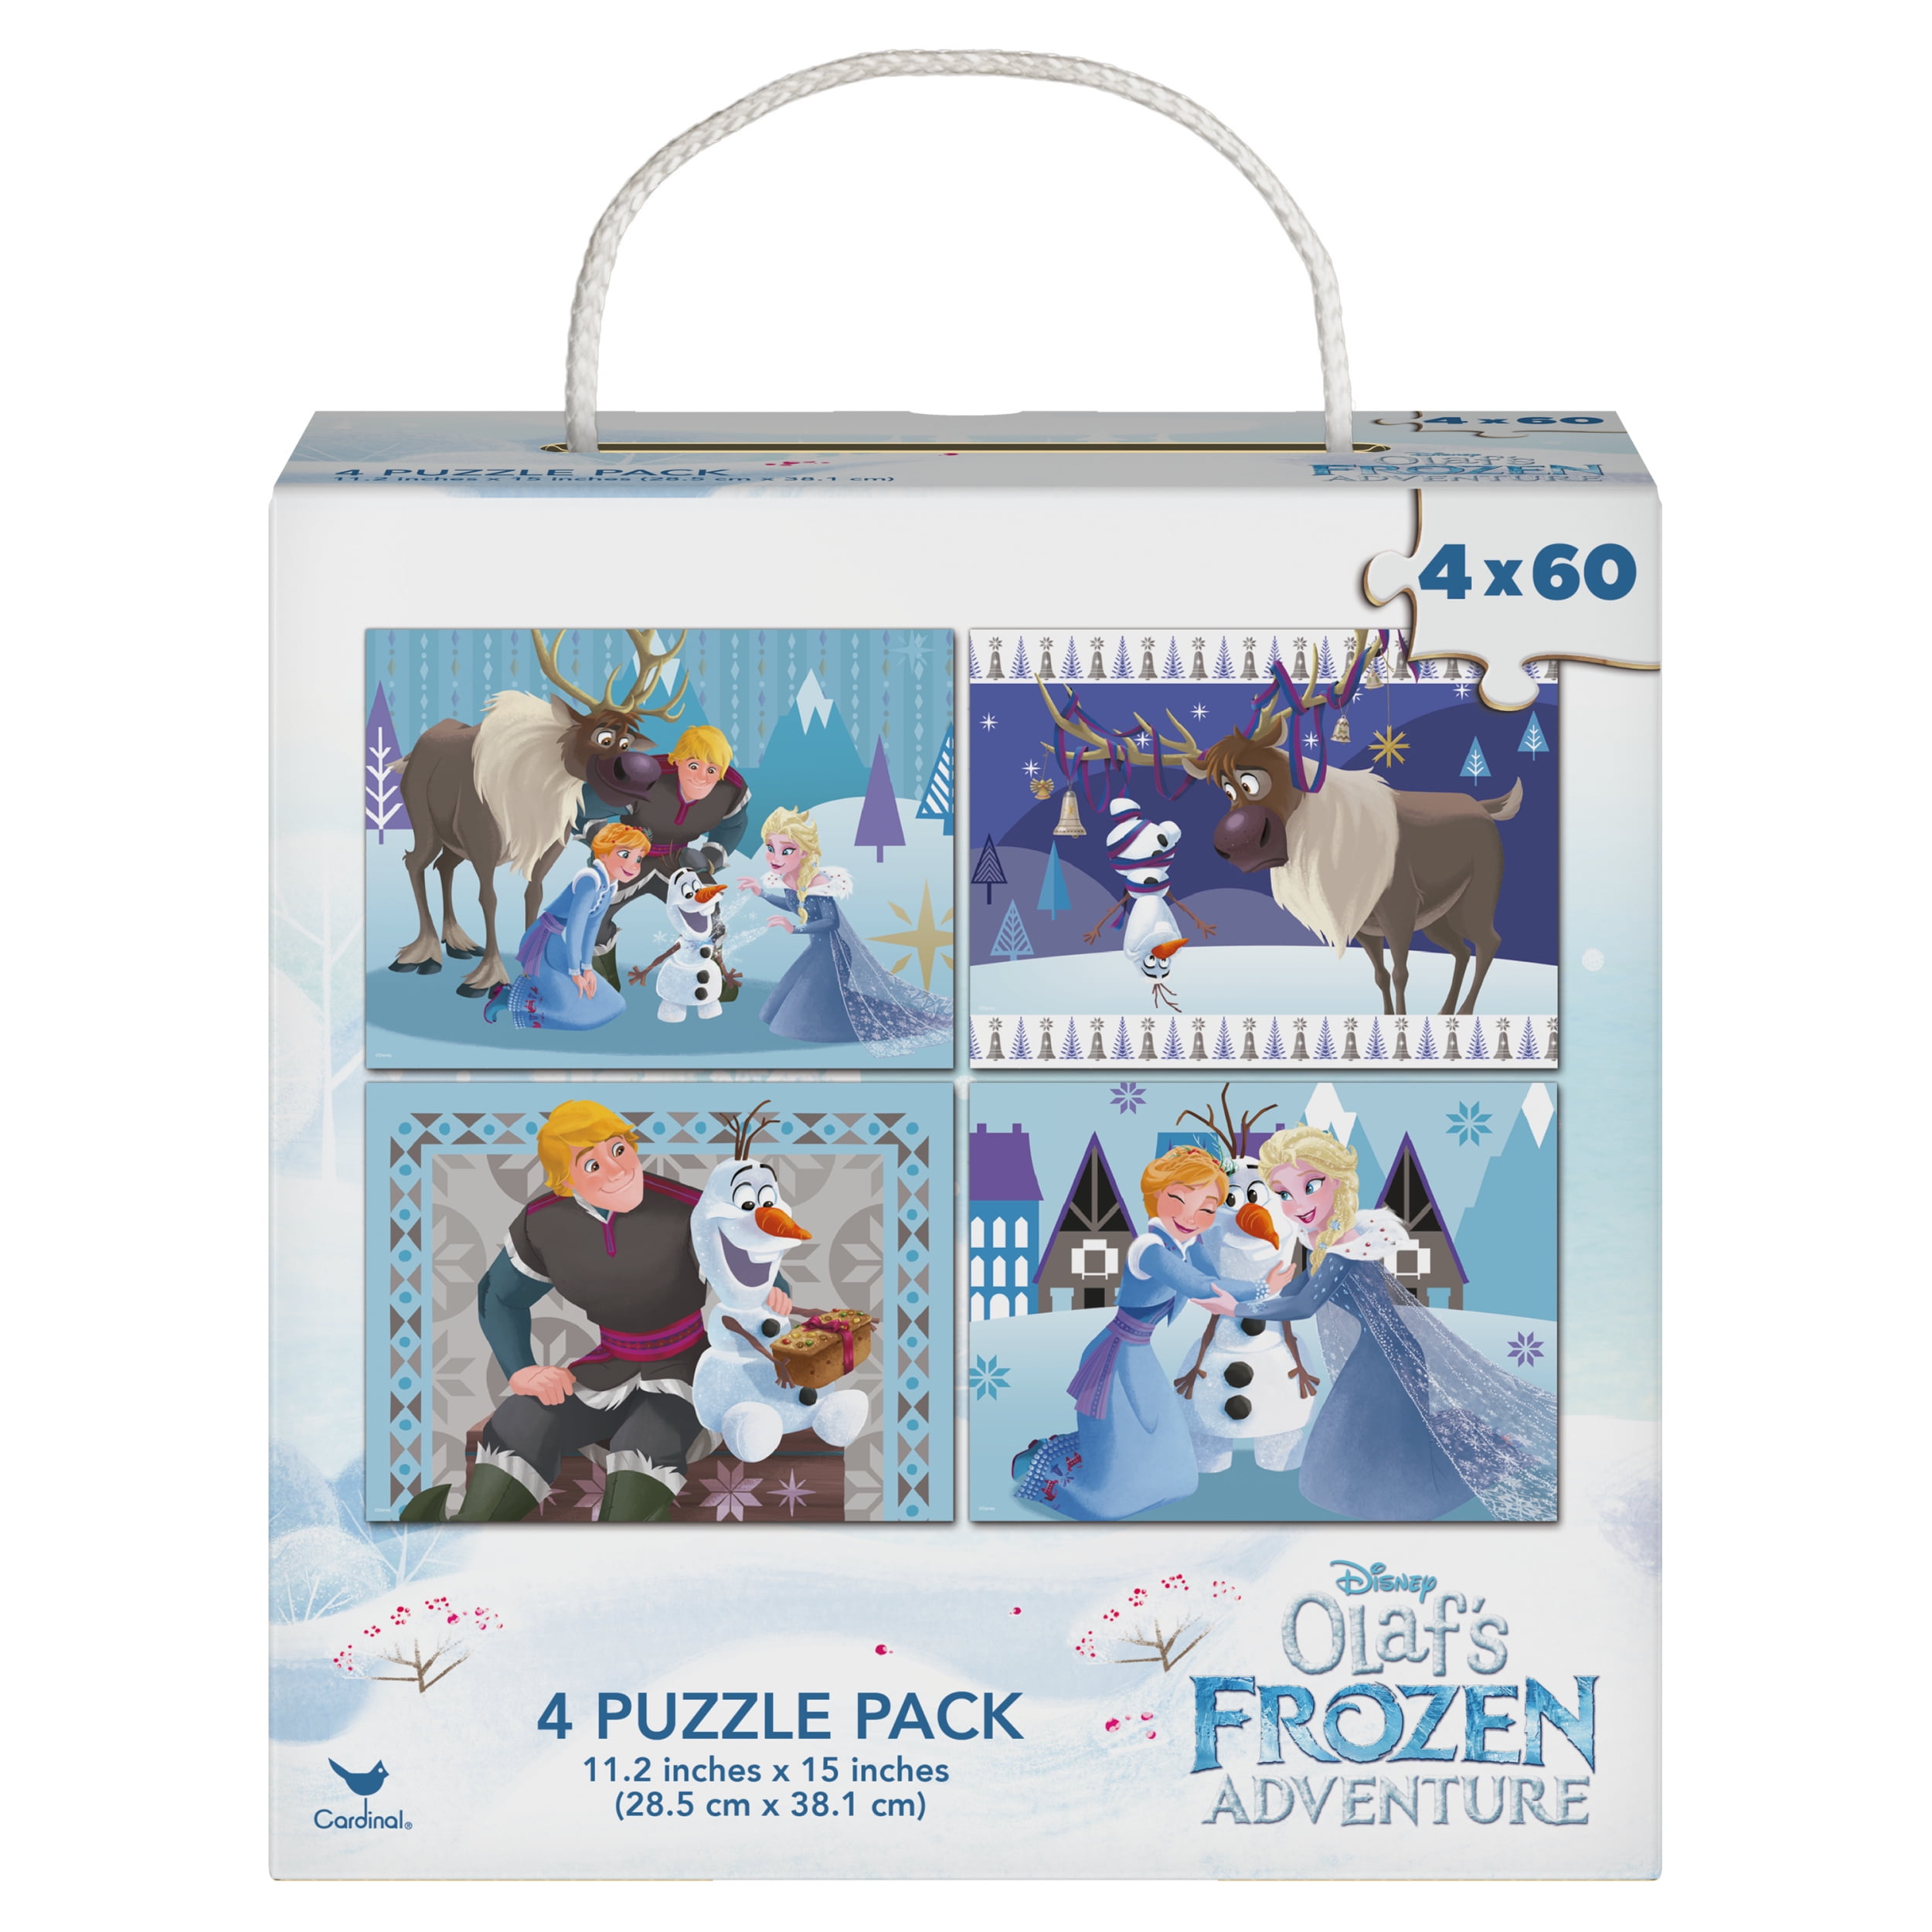 New Frozen 4 Puzzle Pack